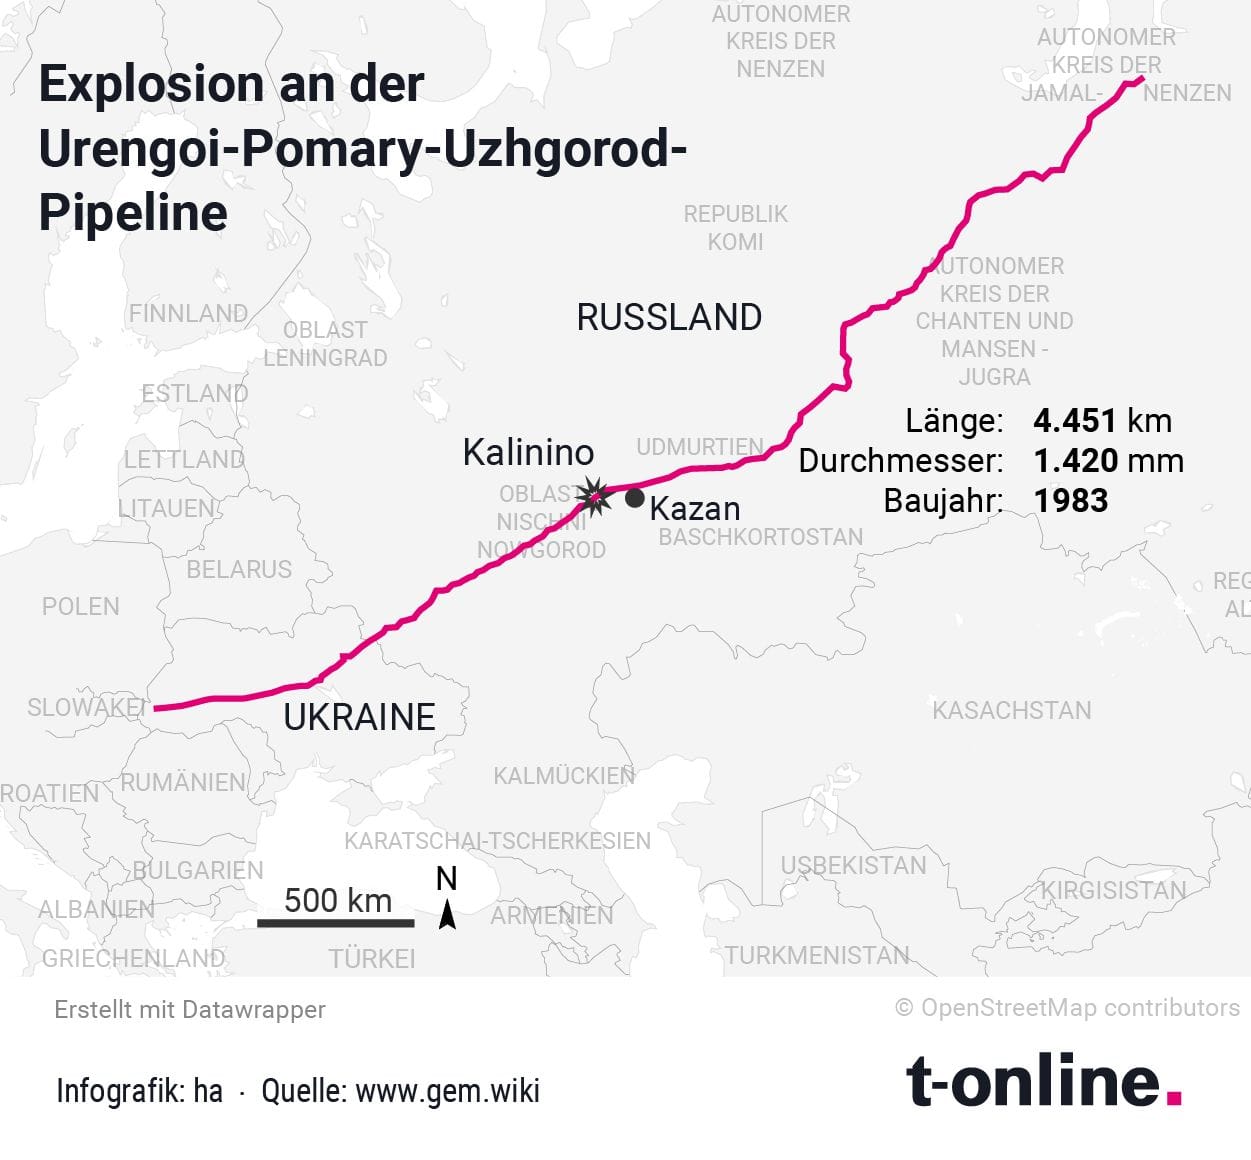 PipelineExplosion_2